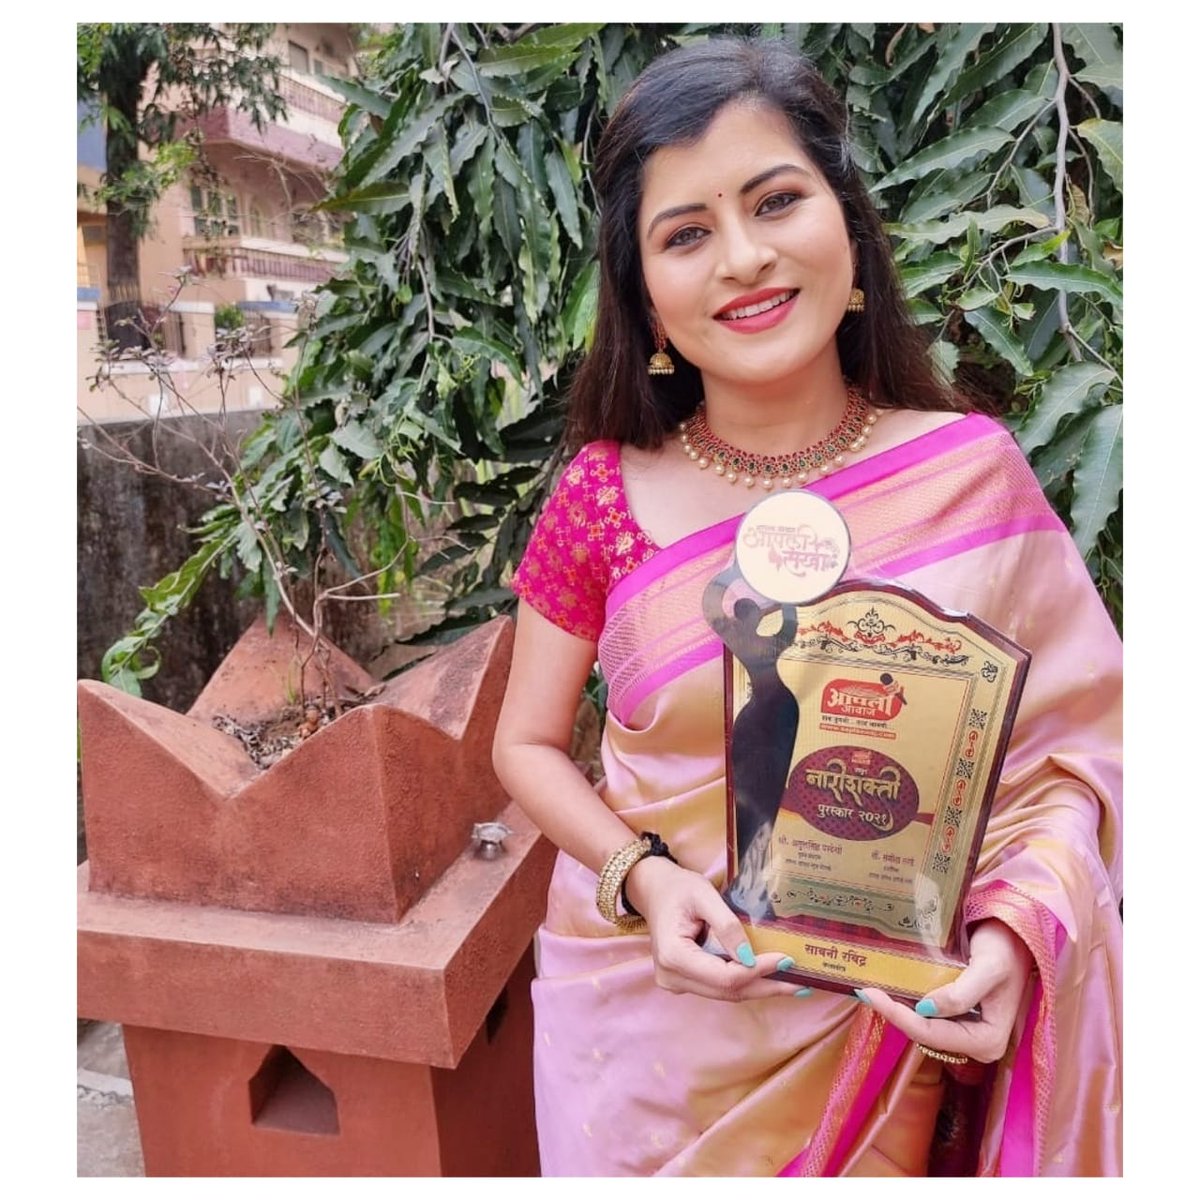 गायिका @savaniravindra 'नारीशक्ती २०२१' पुरस्काराने सन्मानित.

#savanieeravindrra #narishakti #narishaktipuraskar #savanieeoriginals #savanieesings #song #singer #savanieestyle #saree #beautifulsavaniee #beautiful #singing  #dreamerspr #UltraMarathi